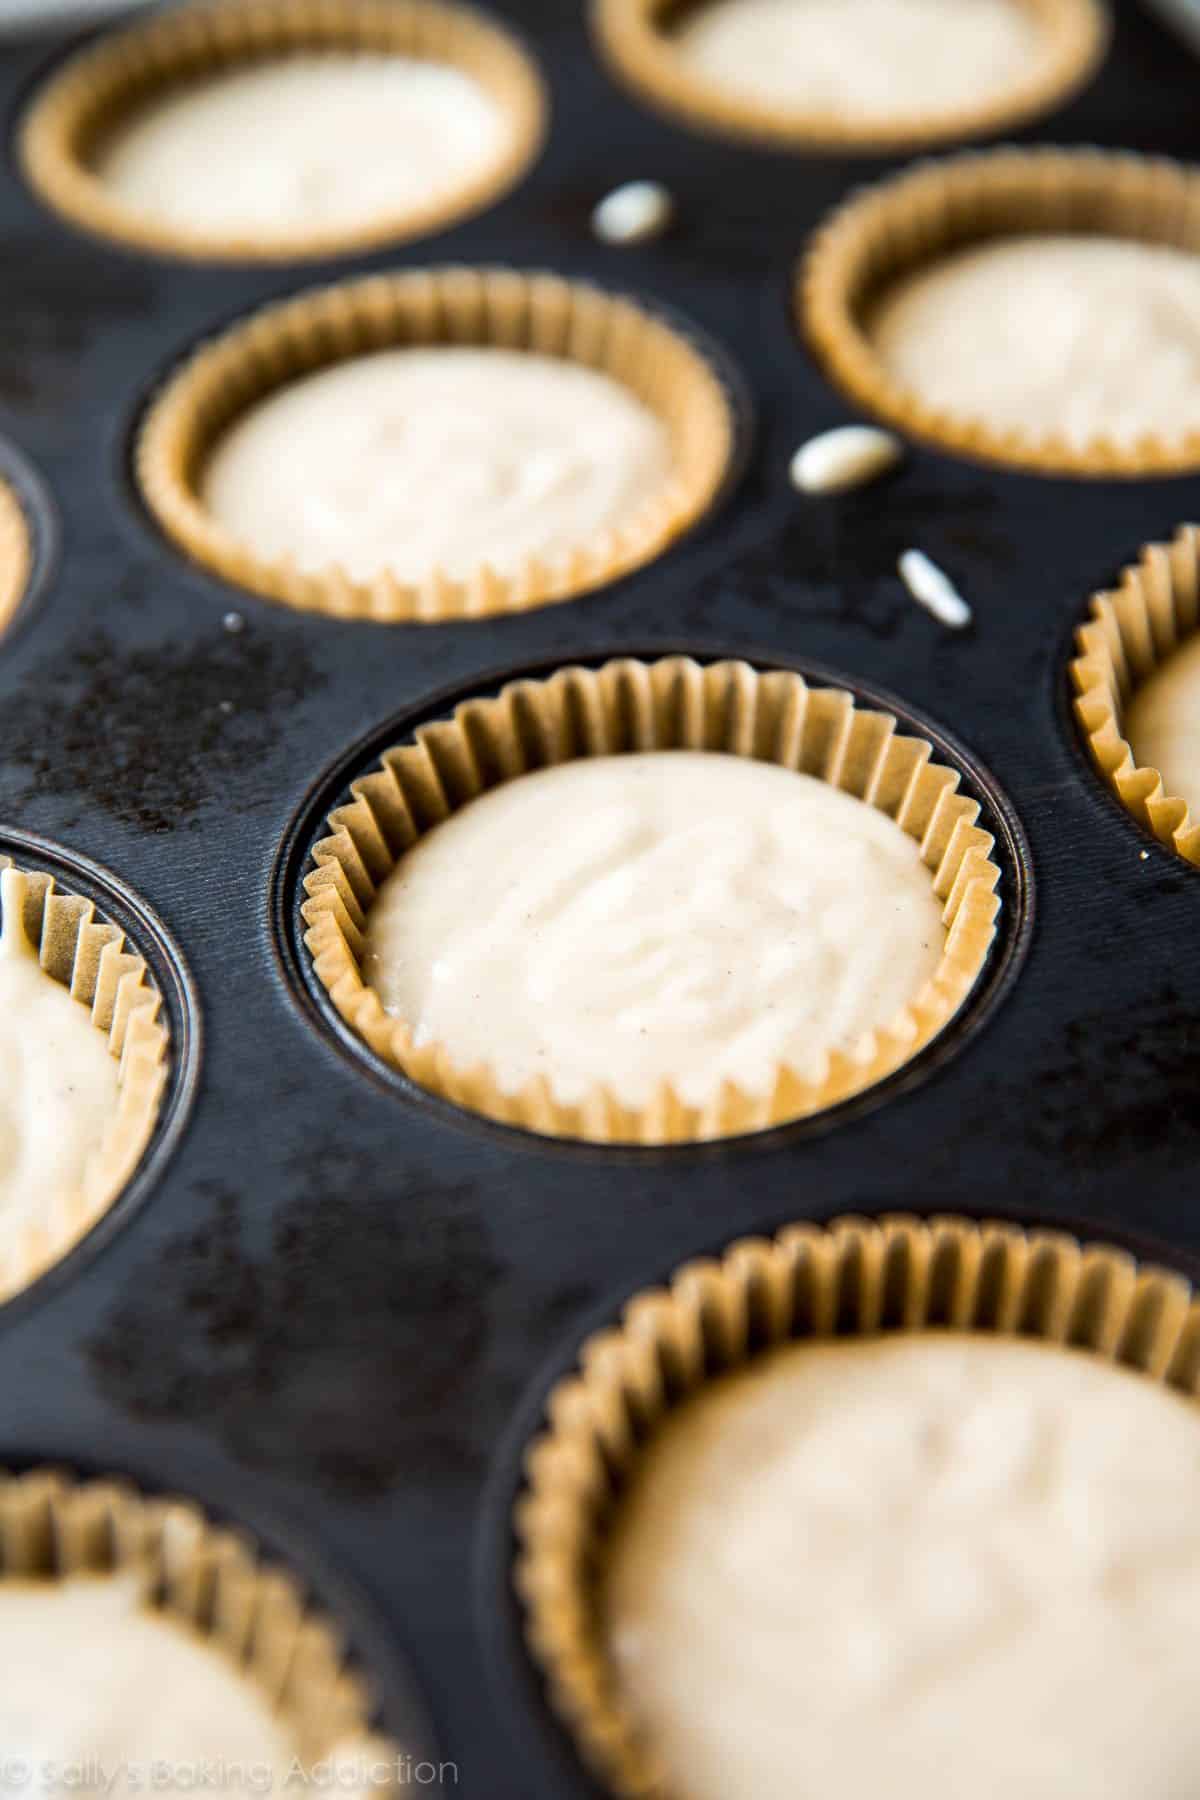 cupcake batter in a cupcake pan before baking.